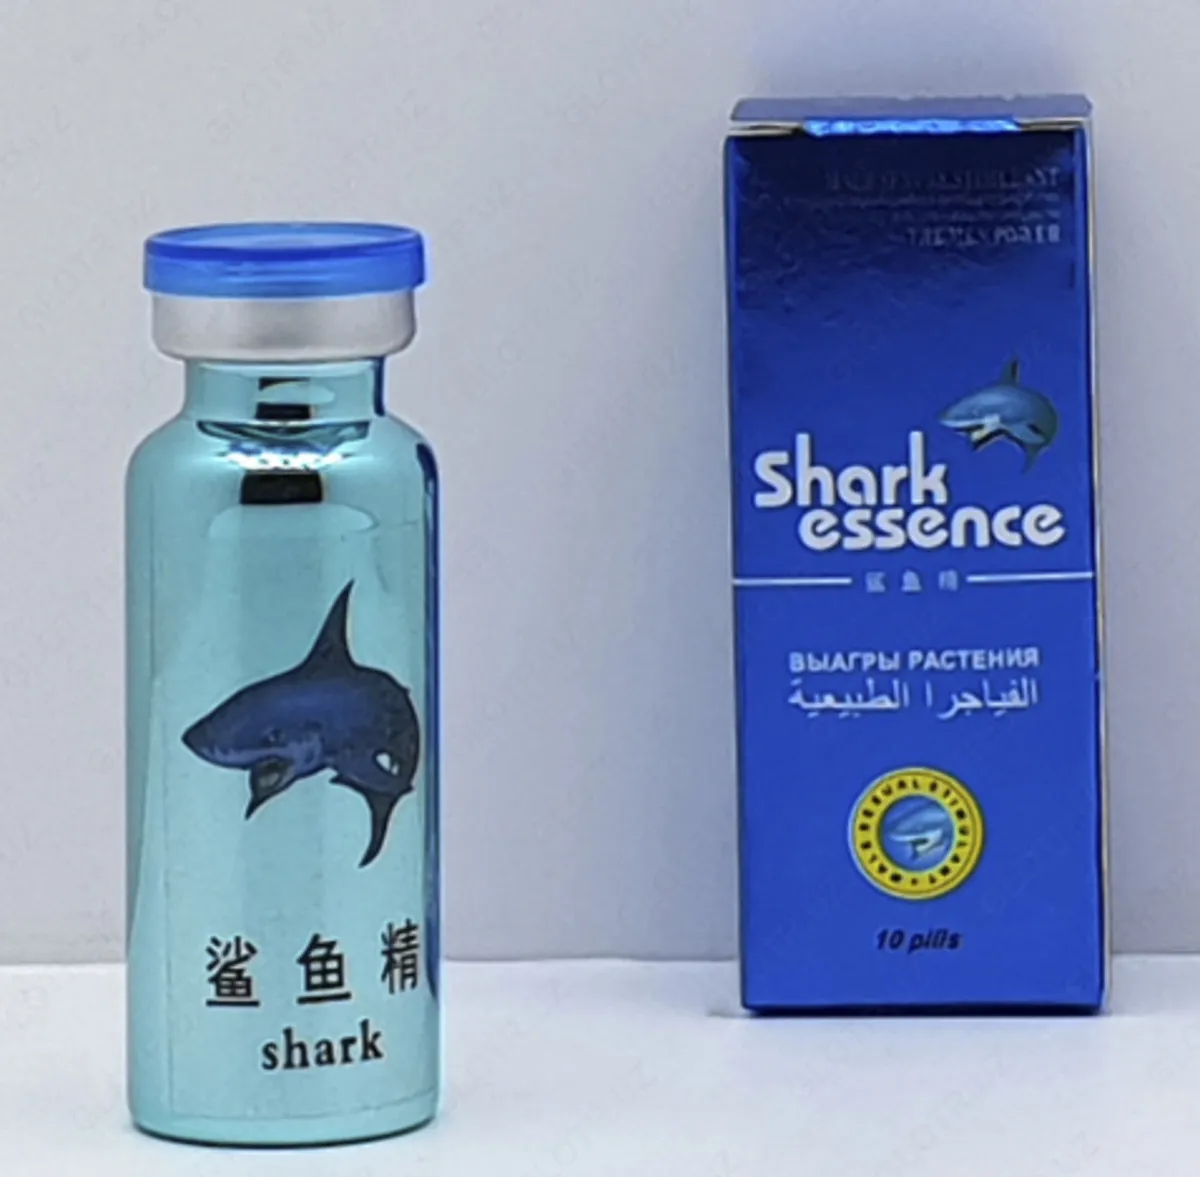 БАД с экстрактом виагры акулы Shark Essence (10 таблеток)#2